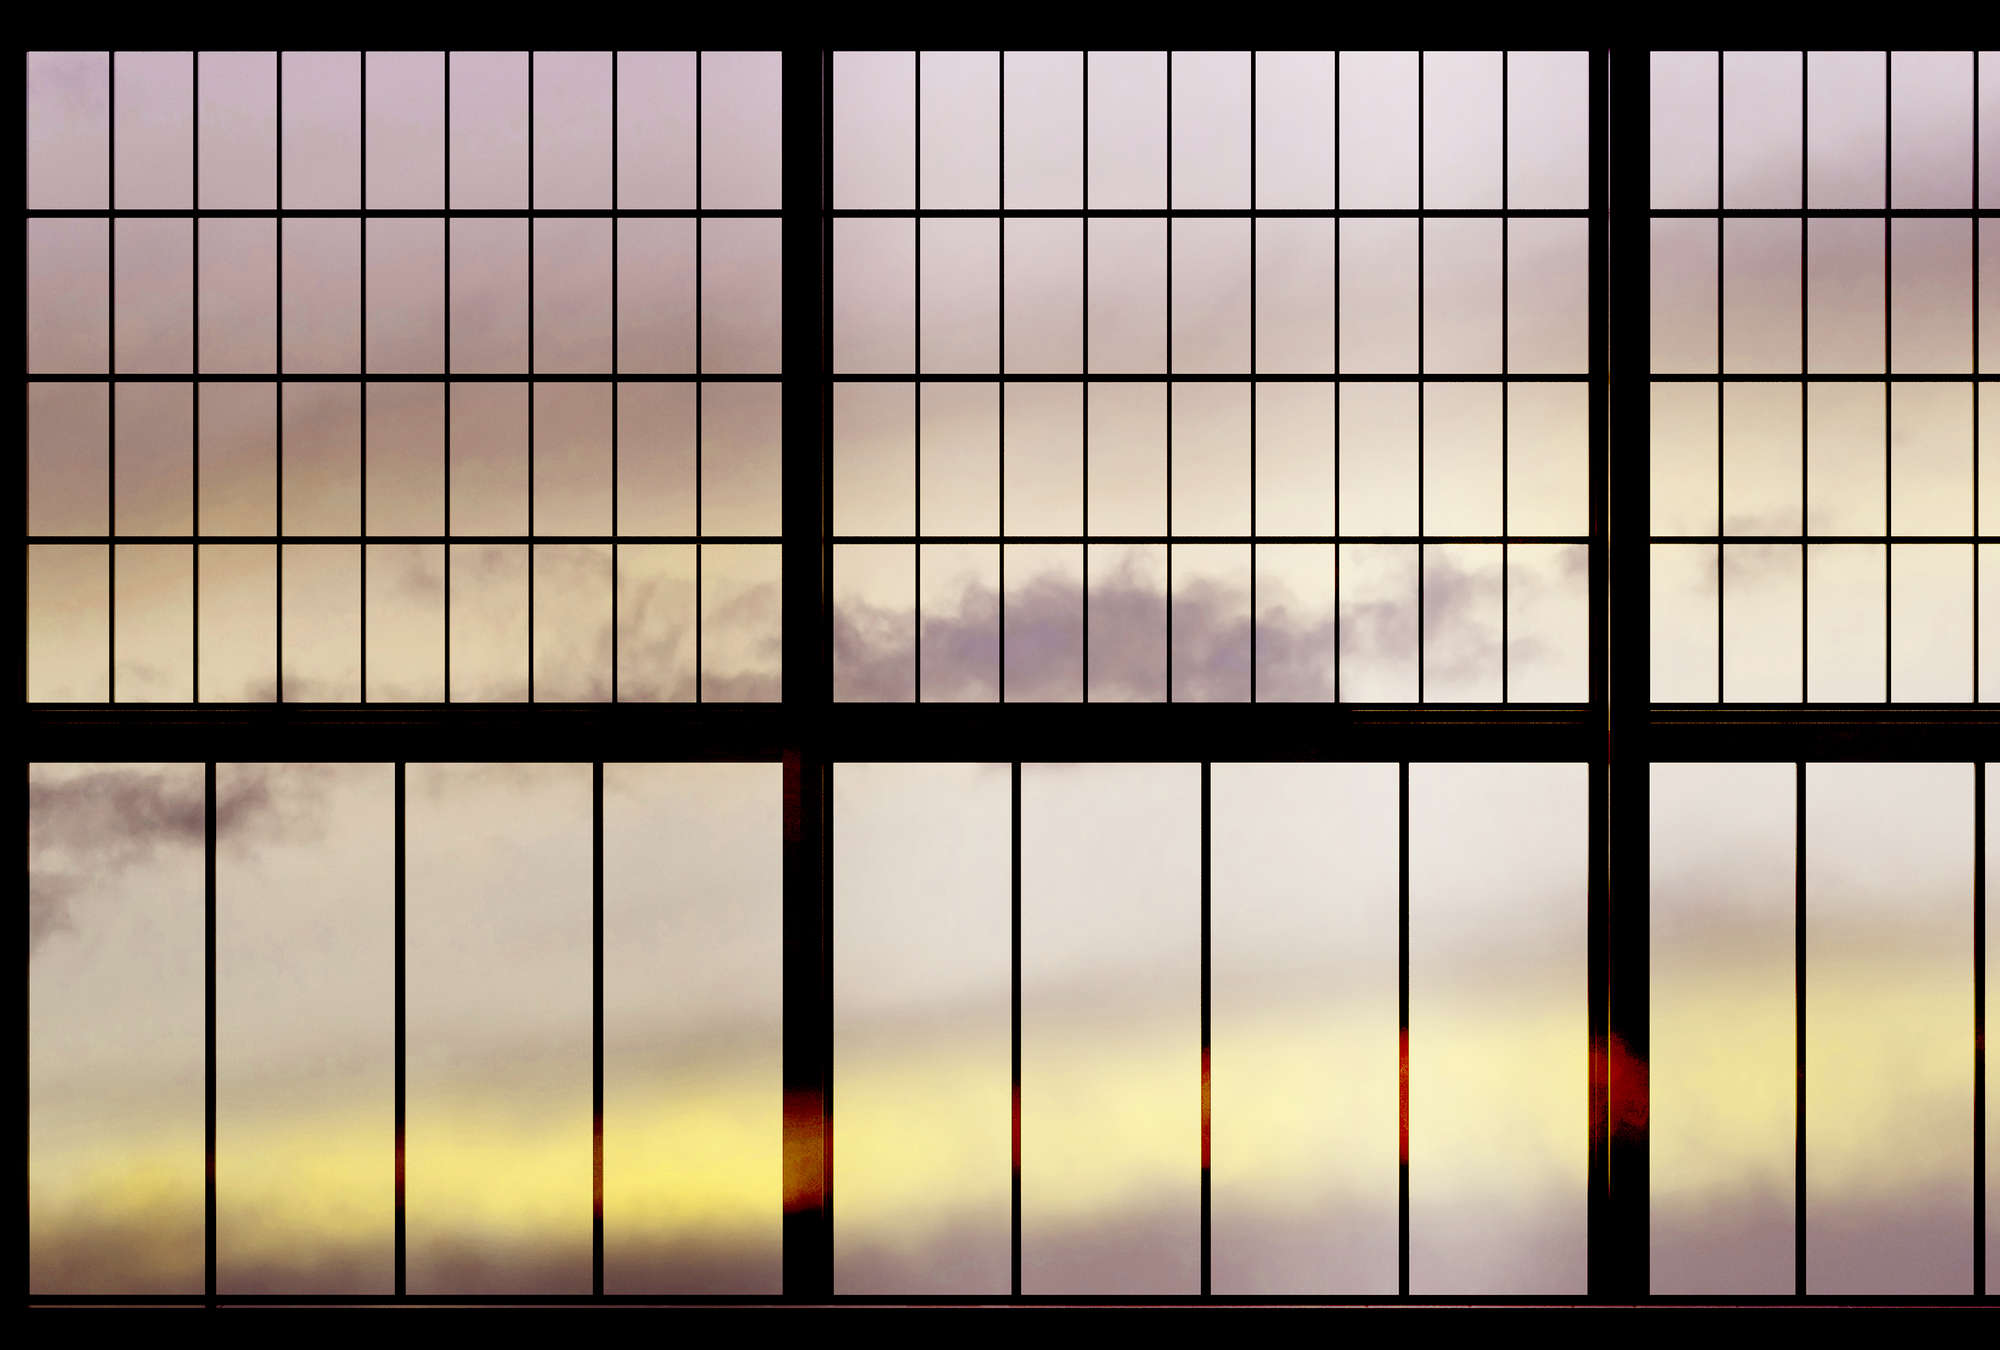             Sky 2 - Fototapete Fenster Ausblick Sonnenaufgang – Gelb, Schwarz | Premium Glattvlies
        